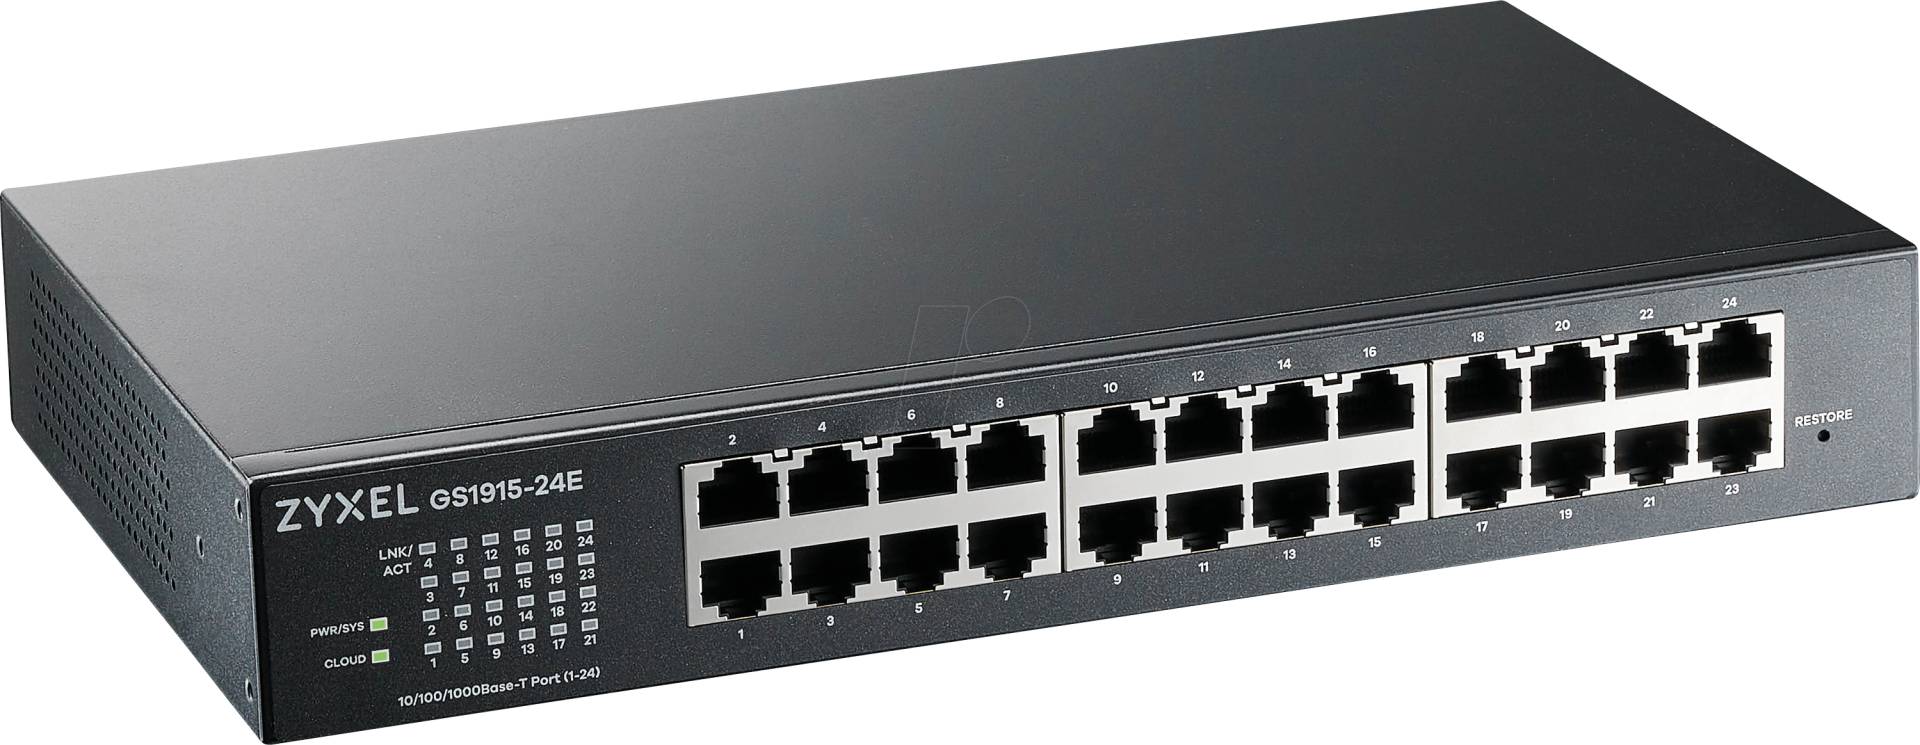 ZYXEL GS1915-24E - Switch, 24-Port, Gigabit Ethernet von Zyxel